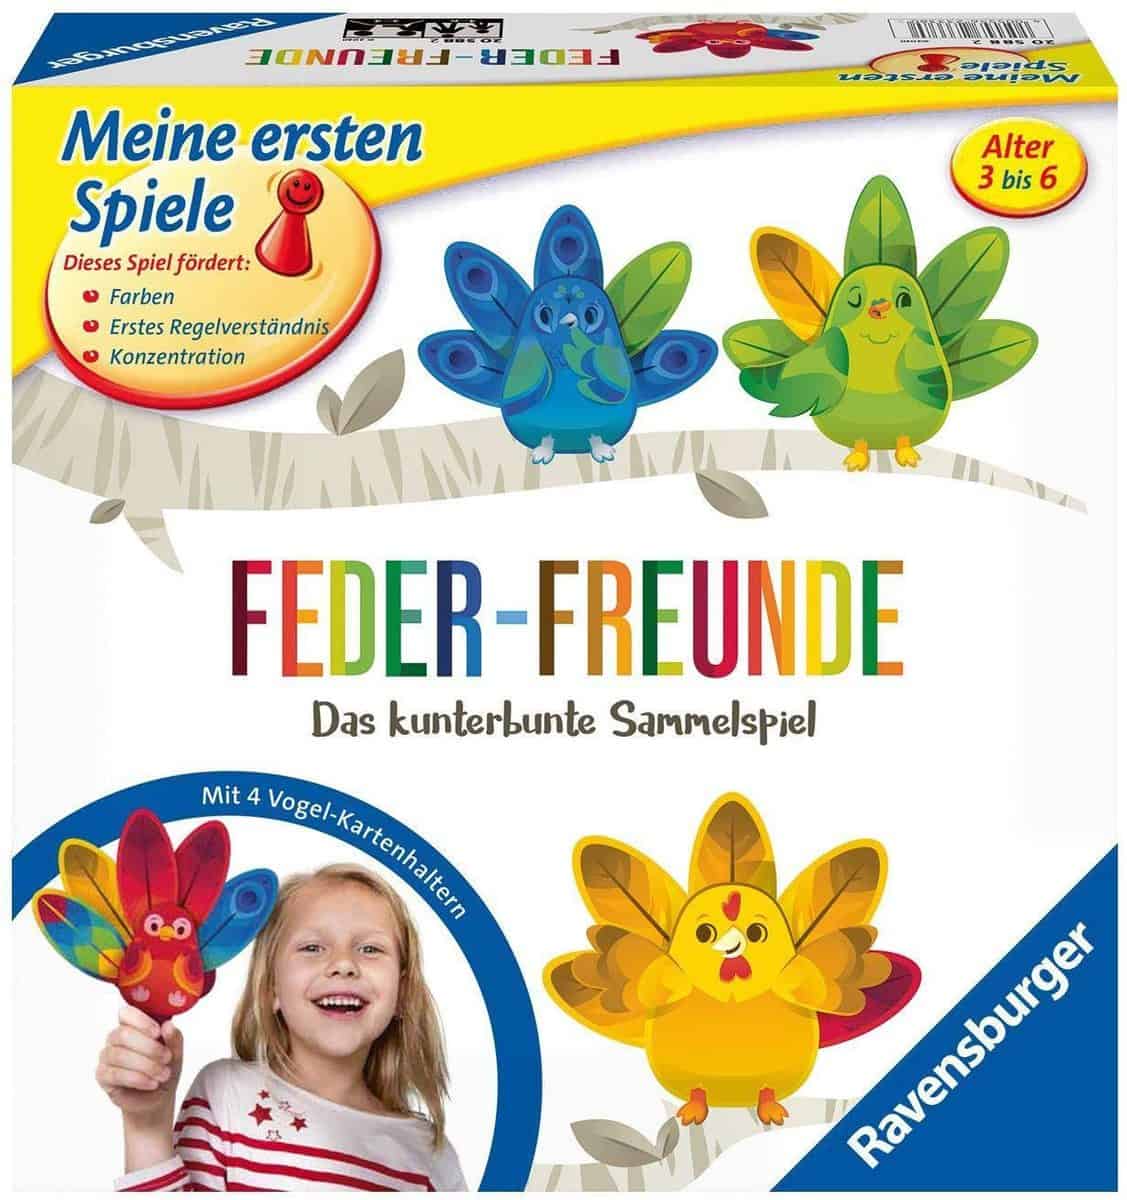 Ravensburger 20587- Feder-Freunde - Kinderspiel für 5,93 € [Prime] Versand statt 15,98 €